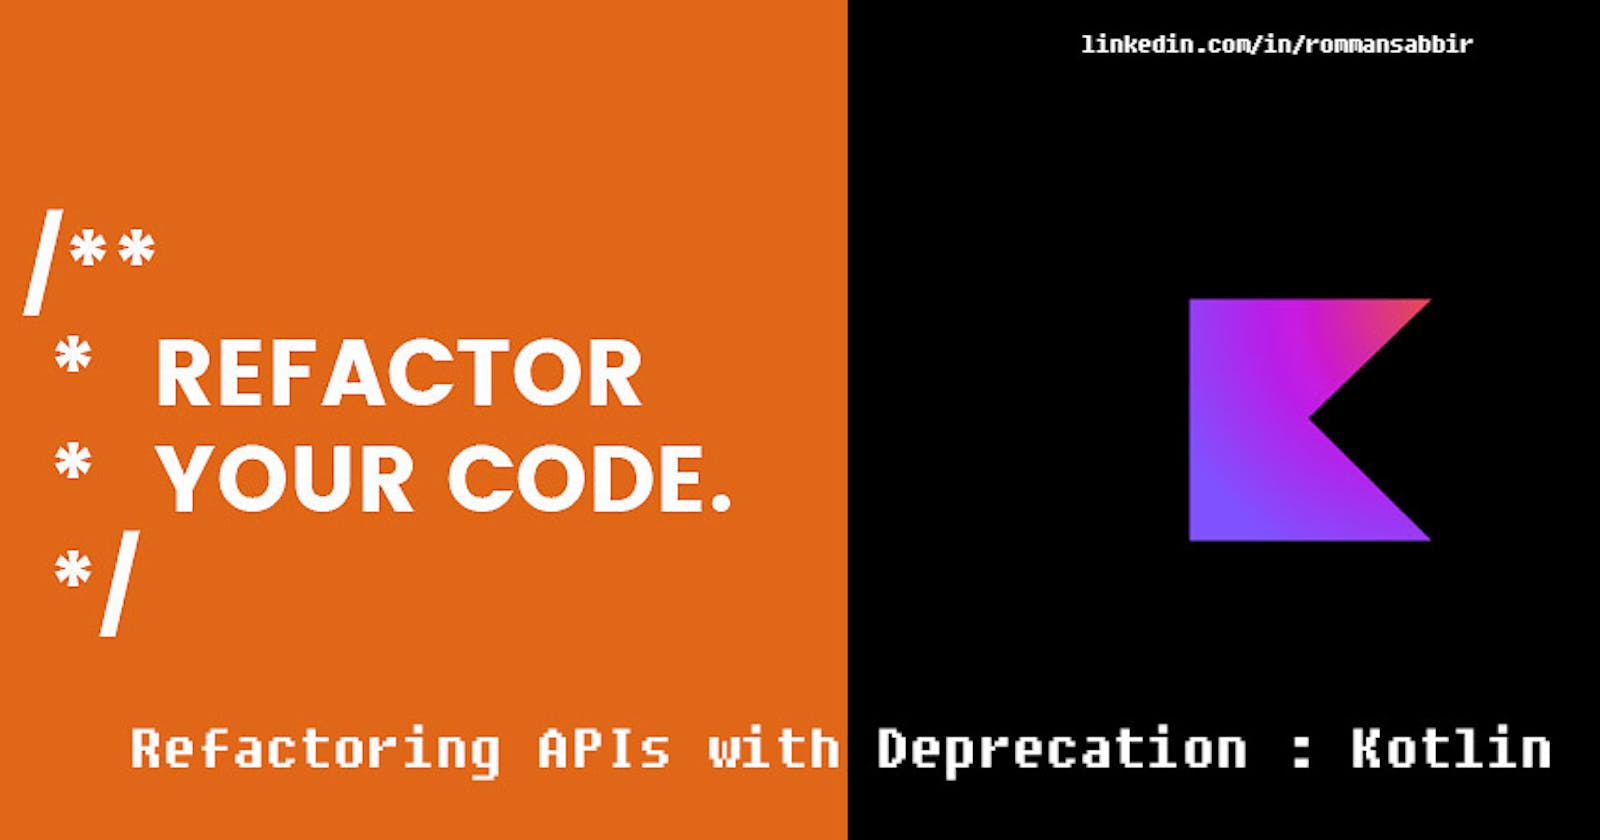 Refactoring APIs with Deprecation : Kotlin